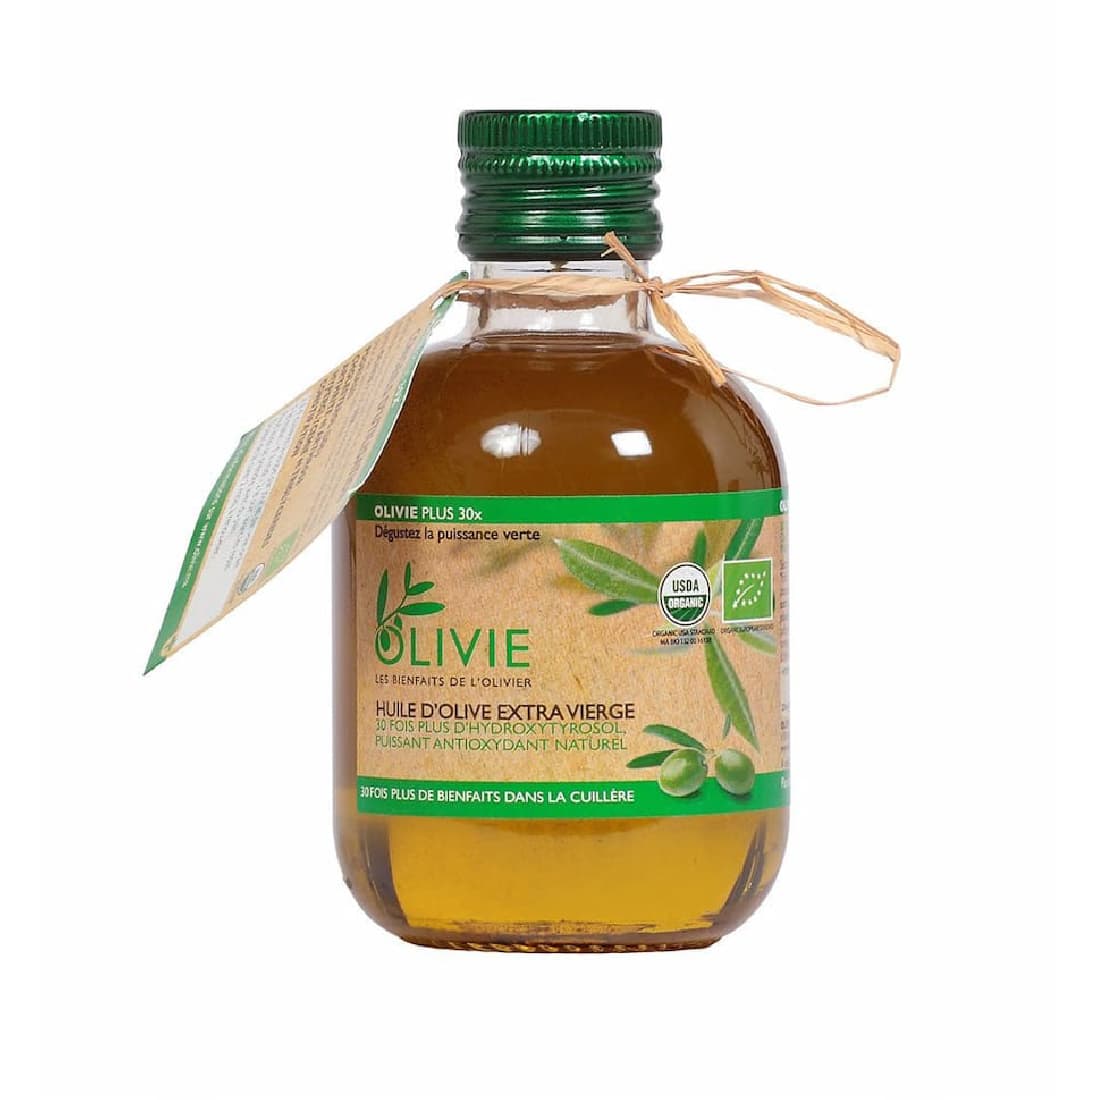 flacon-olivie-plus-30x-Huile-Olive-Extra-Vierge-shopiolivie